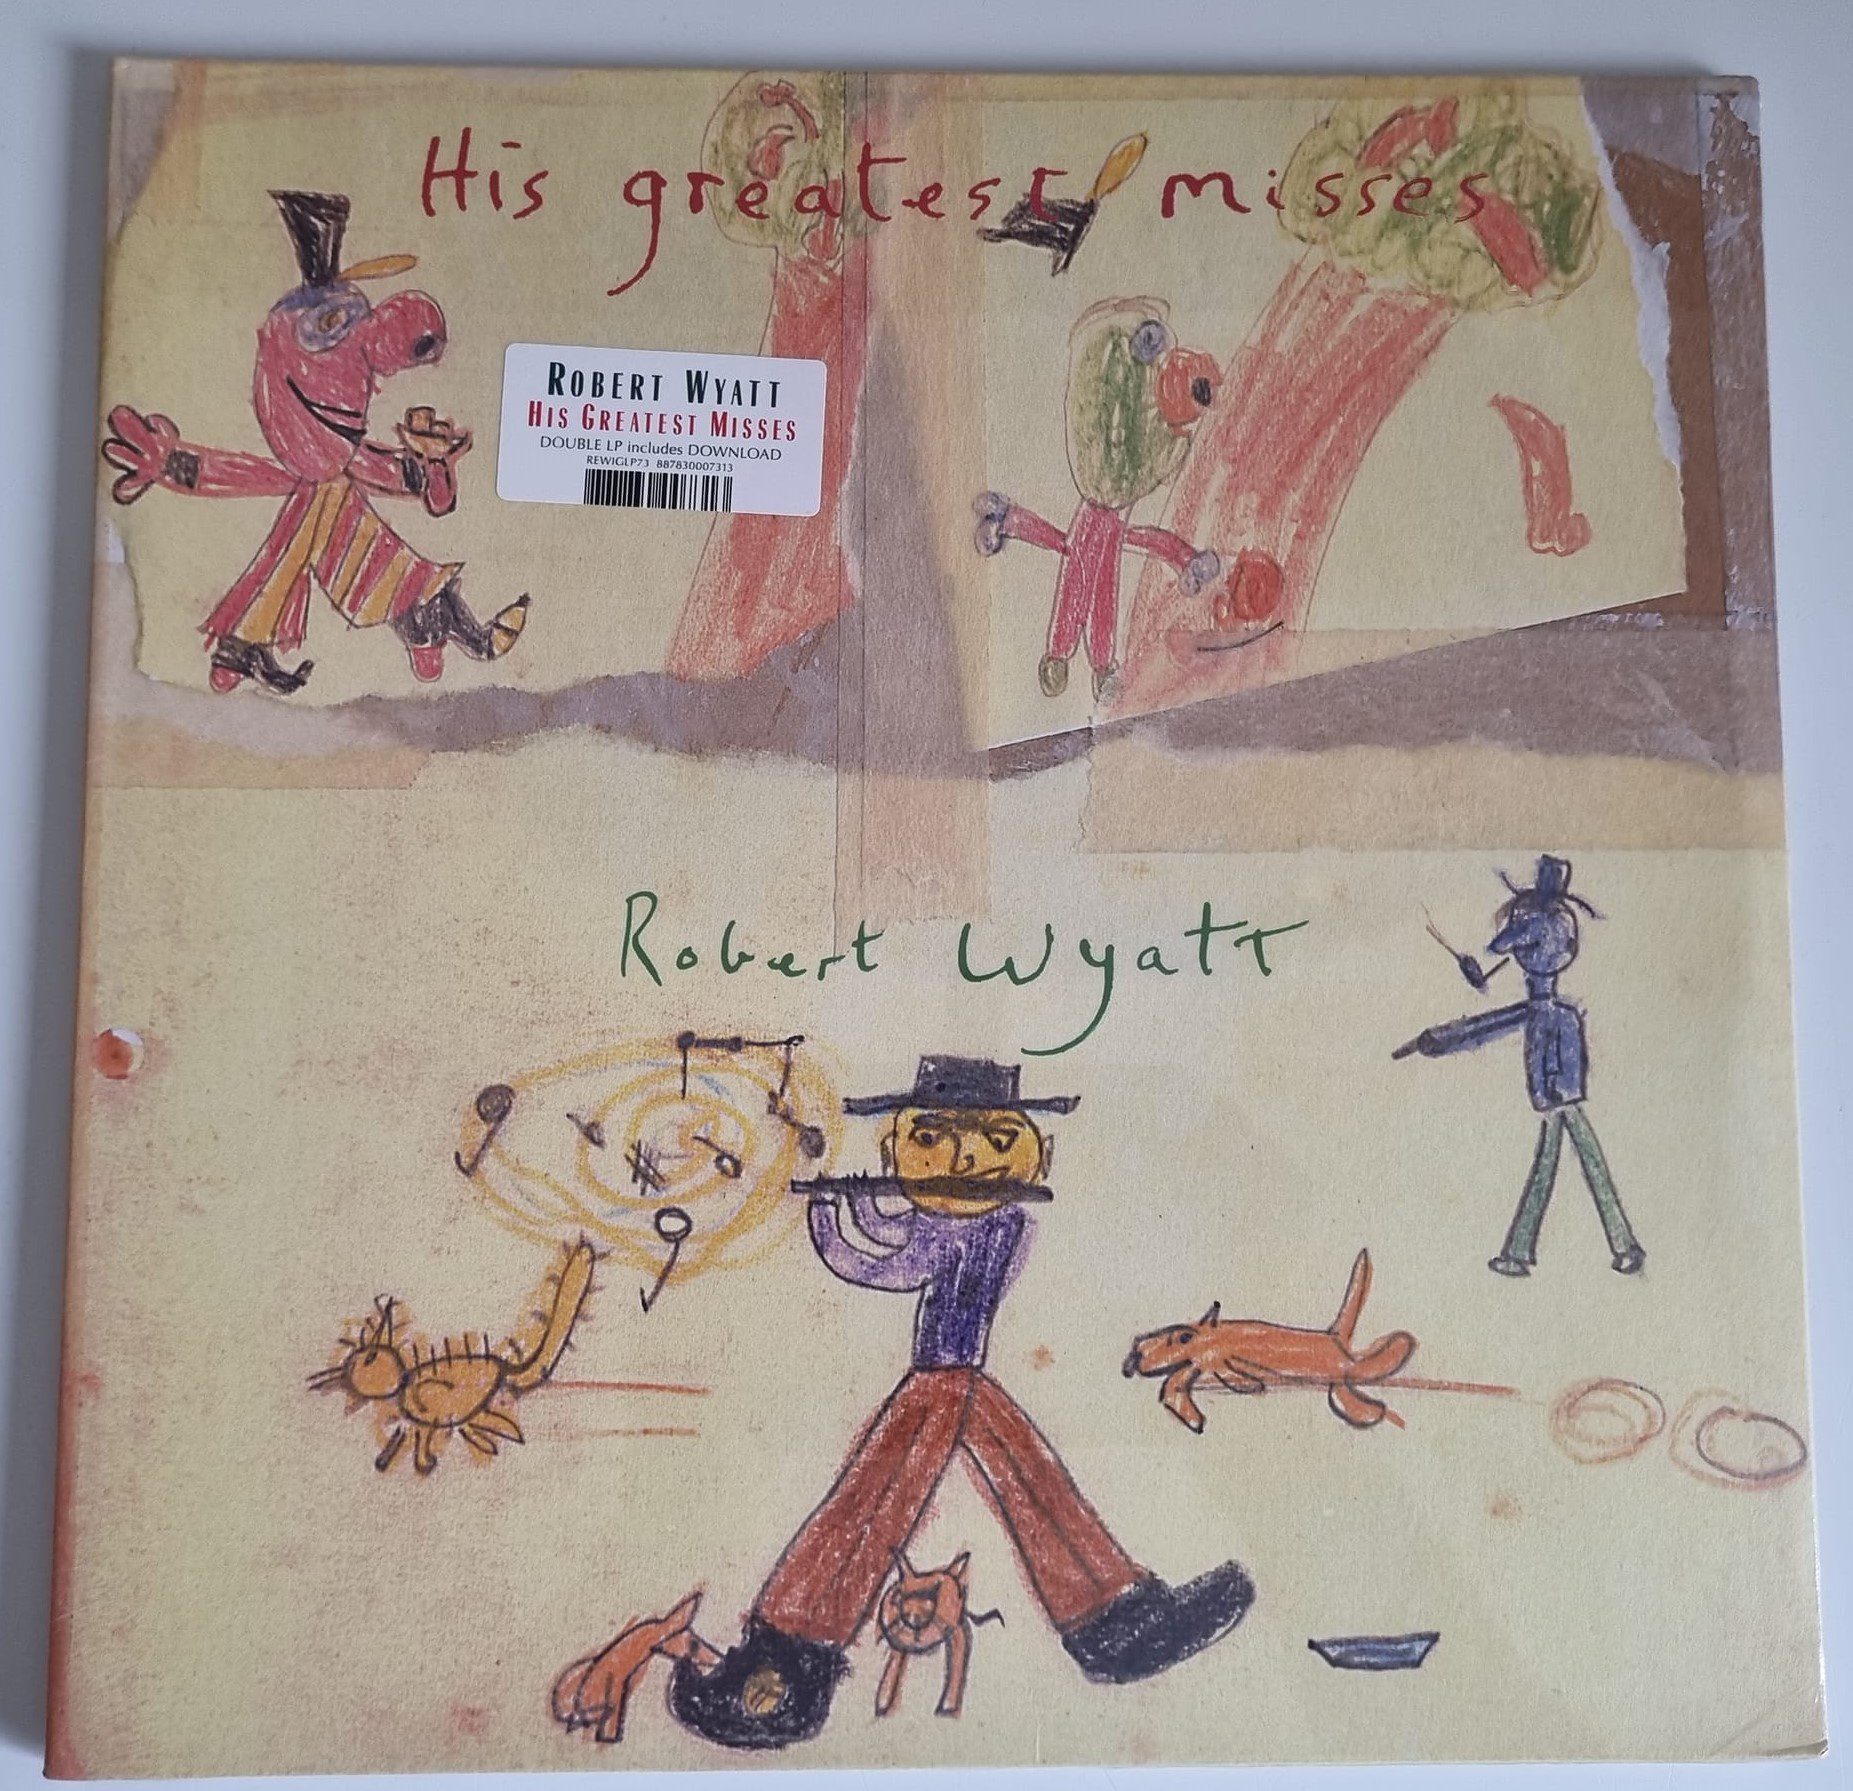 Buy This rare Robert Wyatt record by clicking here